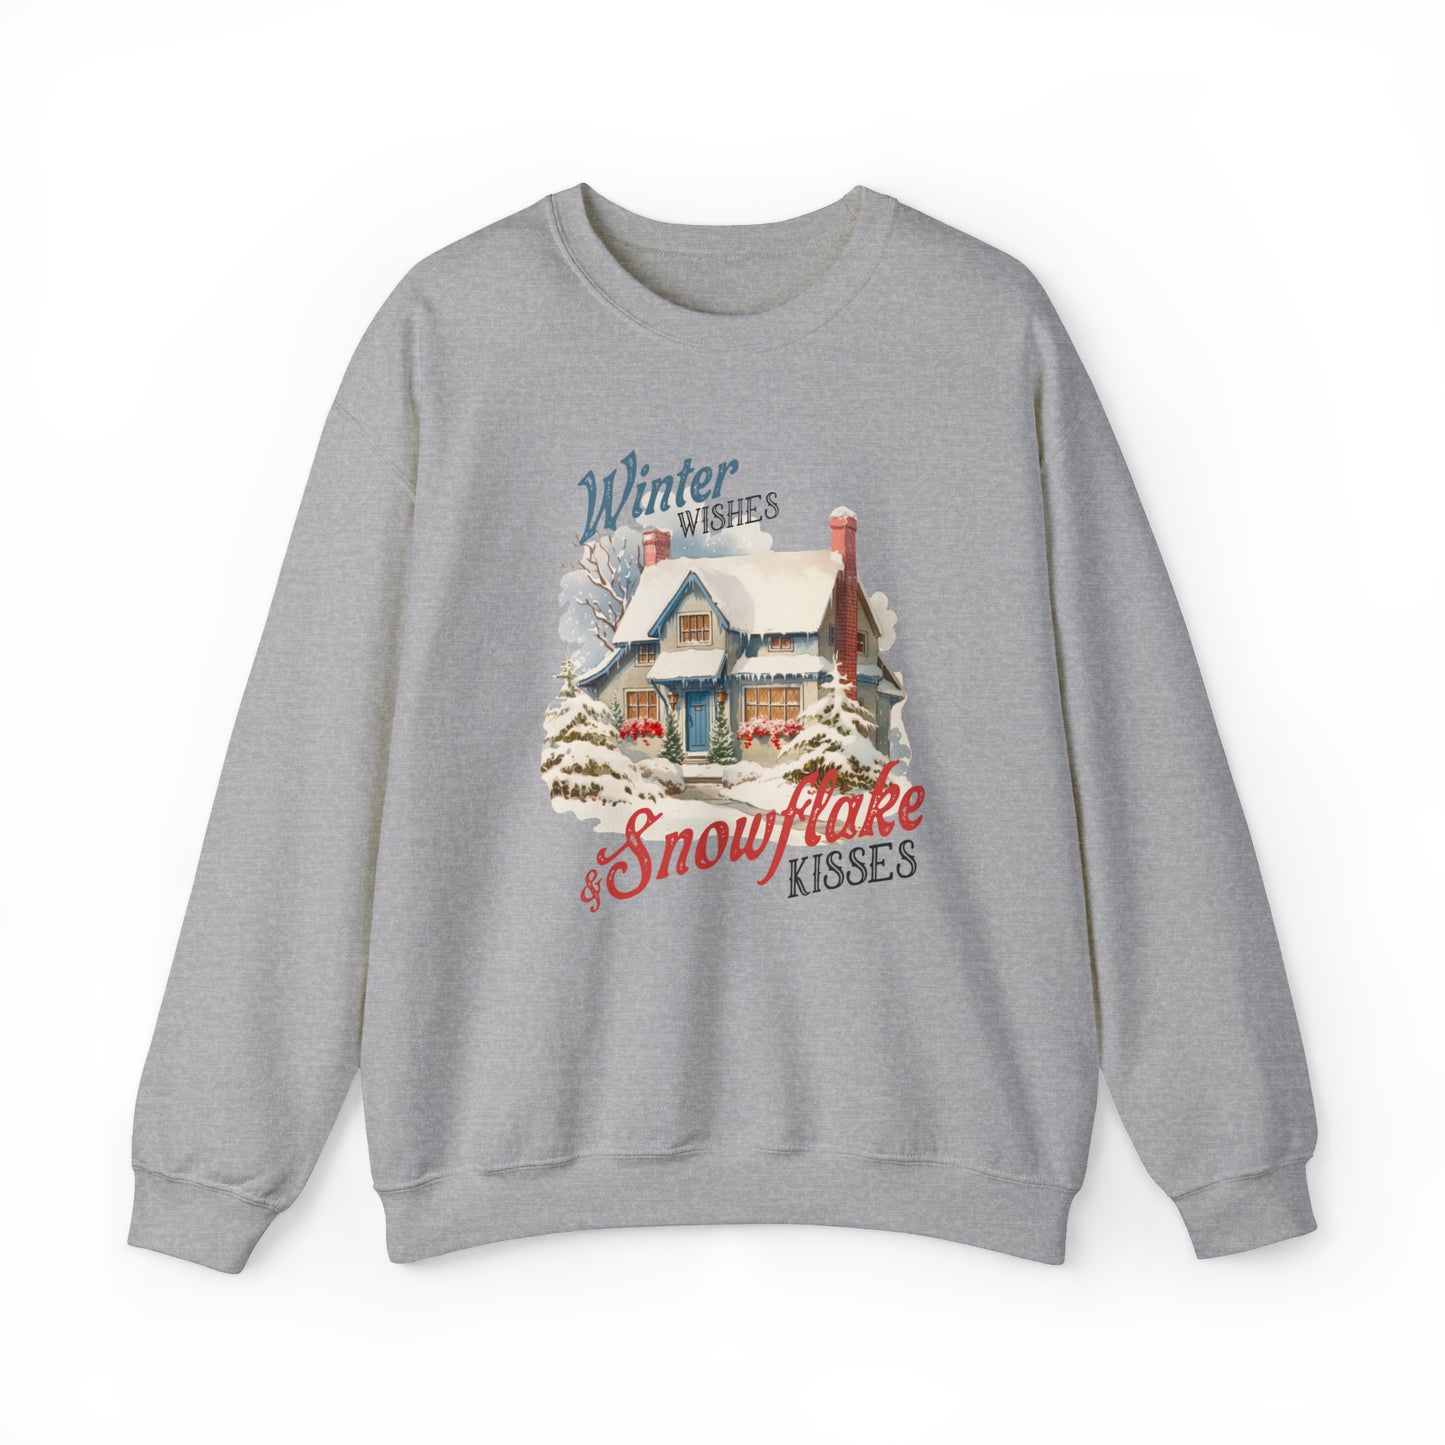 Winter Wishes & Snowflakes Kisses | Crewneck Sweatshirt |